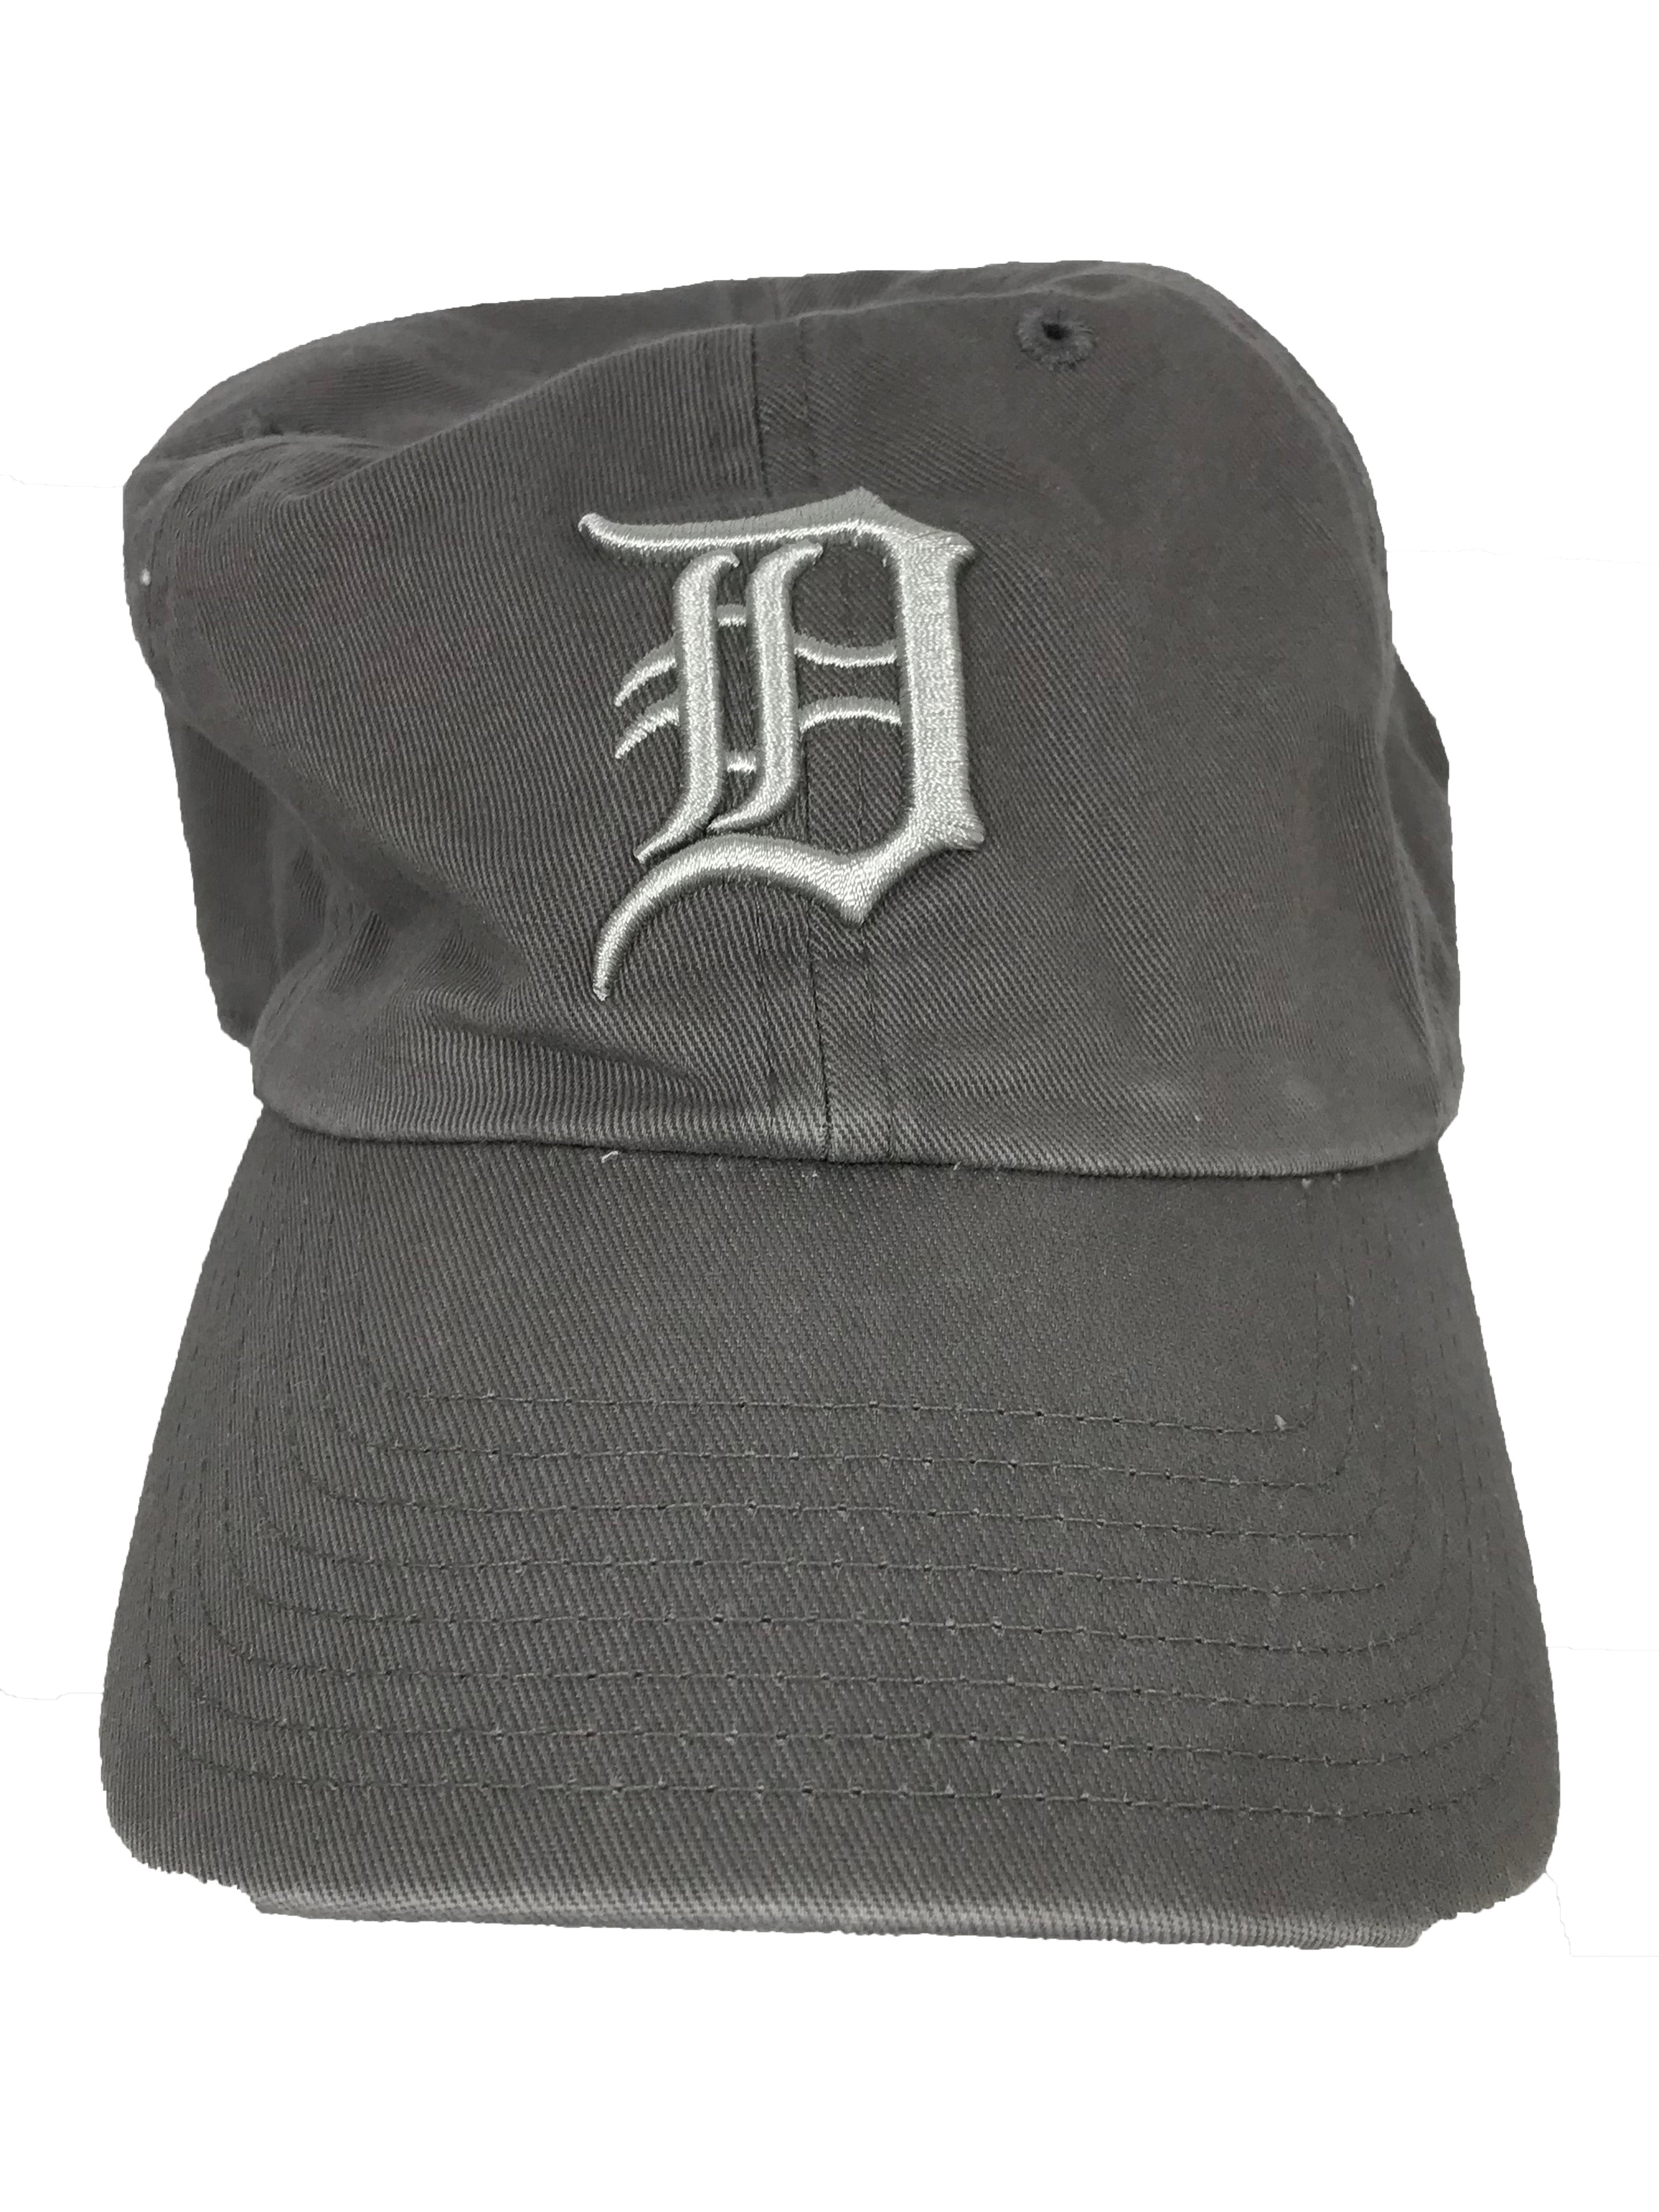 new detroit tigers hat